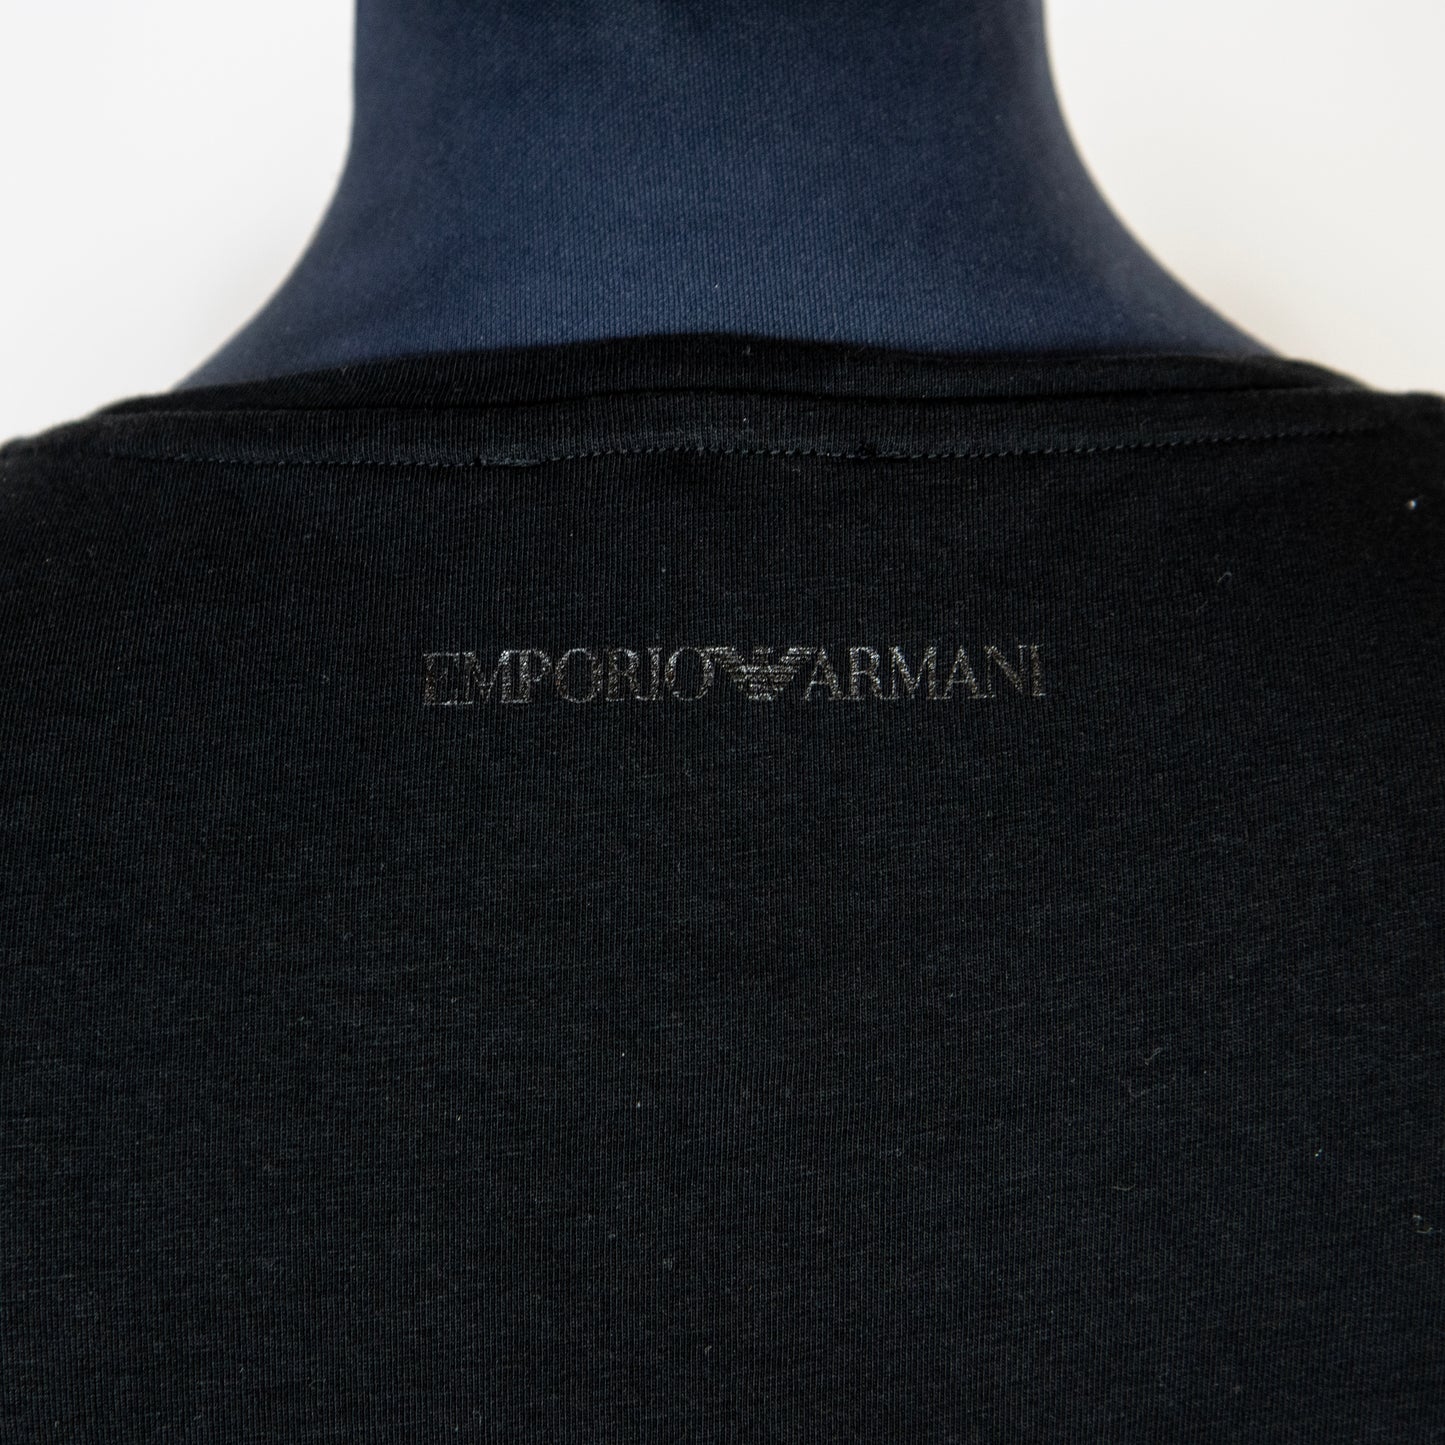 Emporio Armani Cubes Logo Short Sleeve Black T-Shirt Size 12 RRP £100